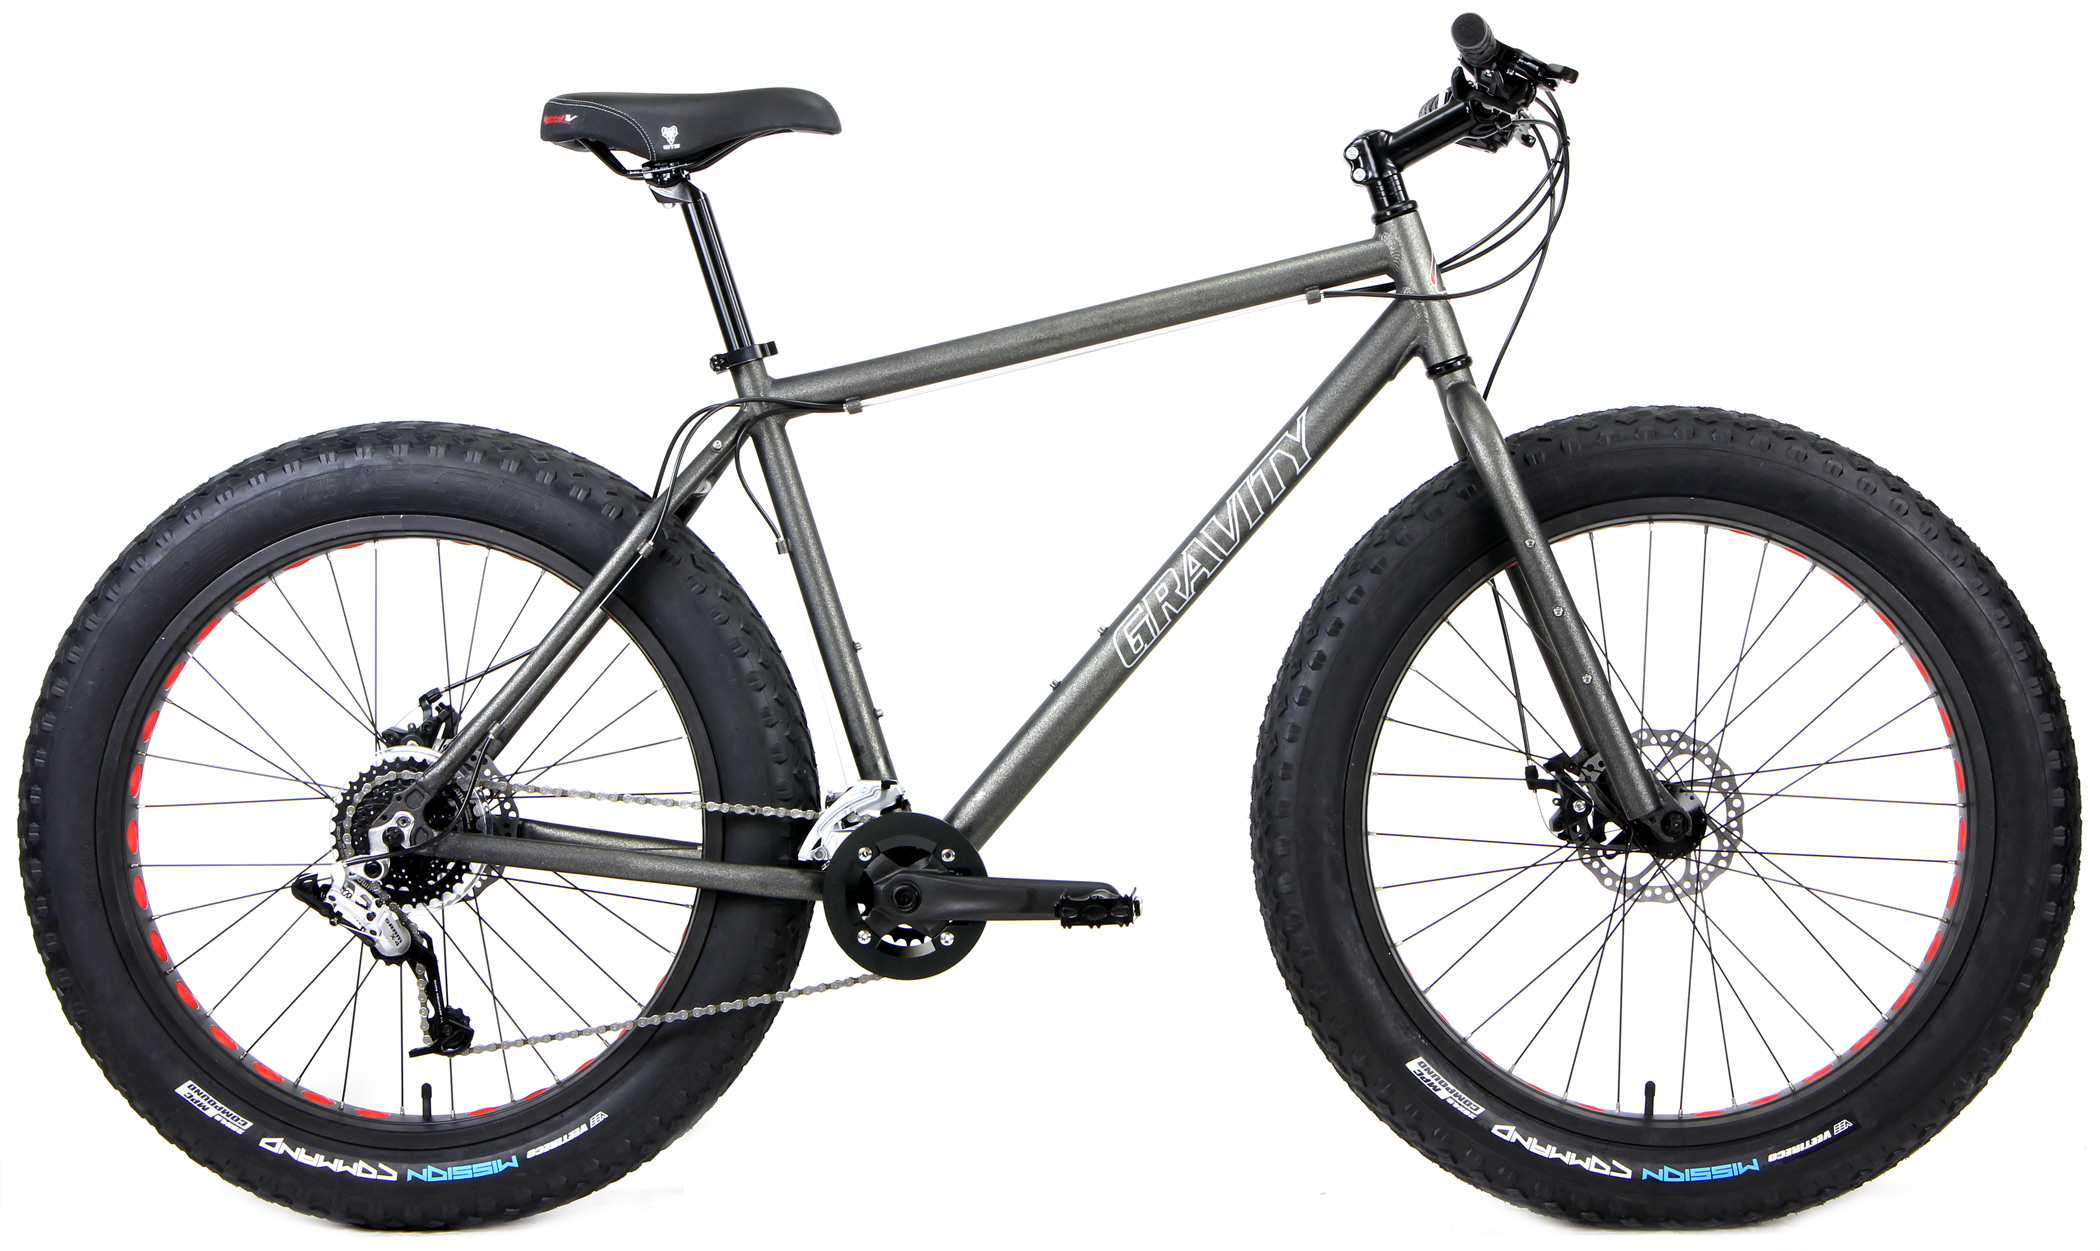 Mountain Bike Tires - Gives your bike Optimum Power